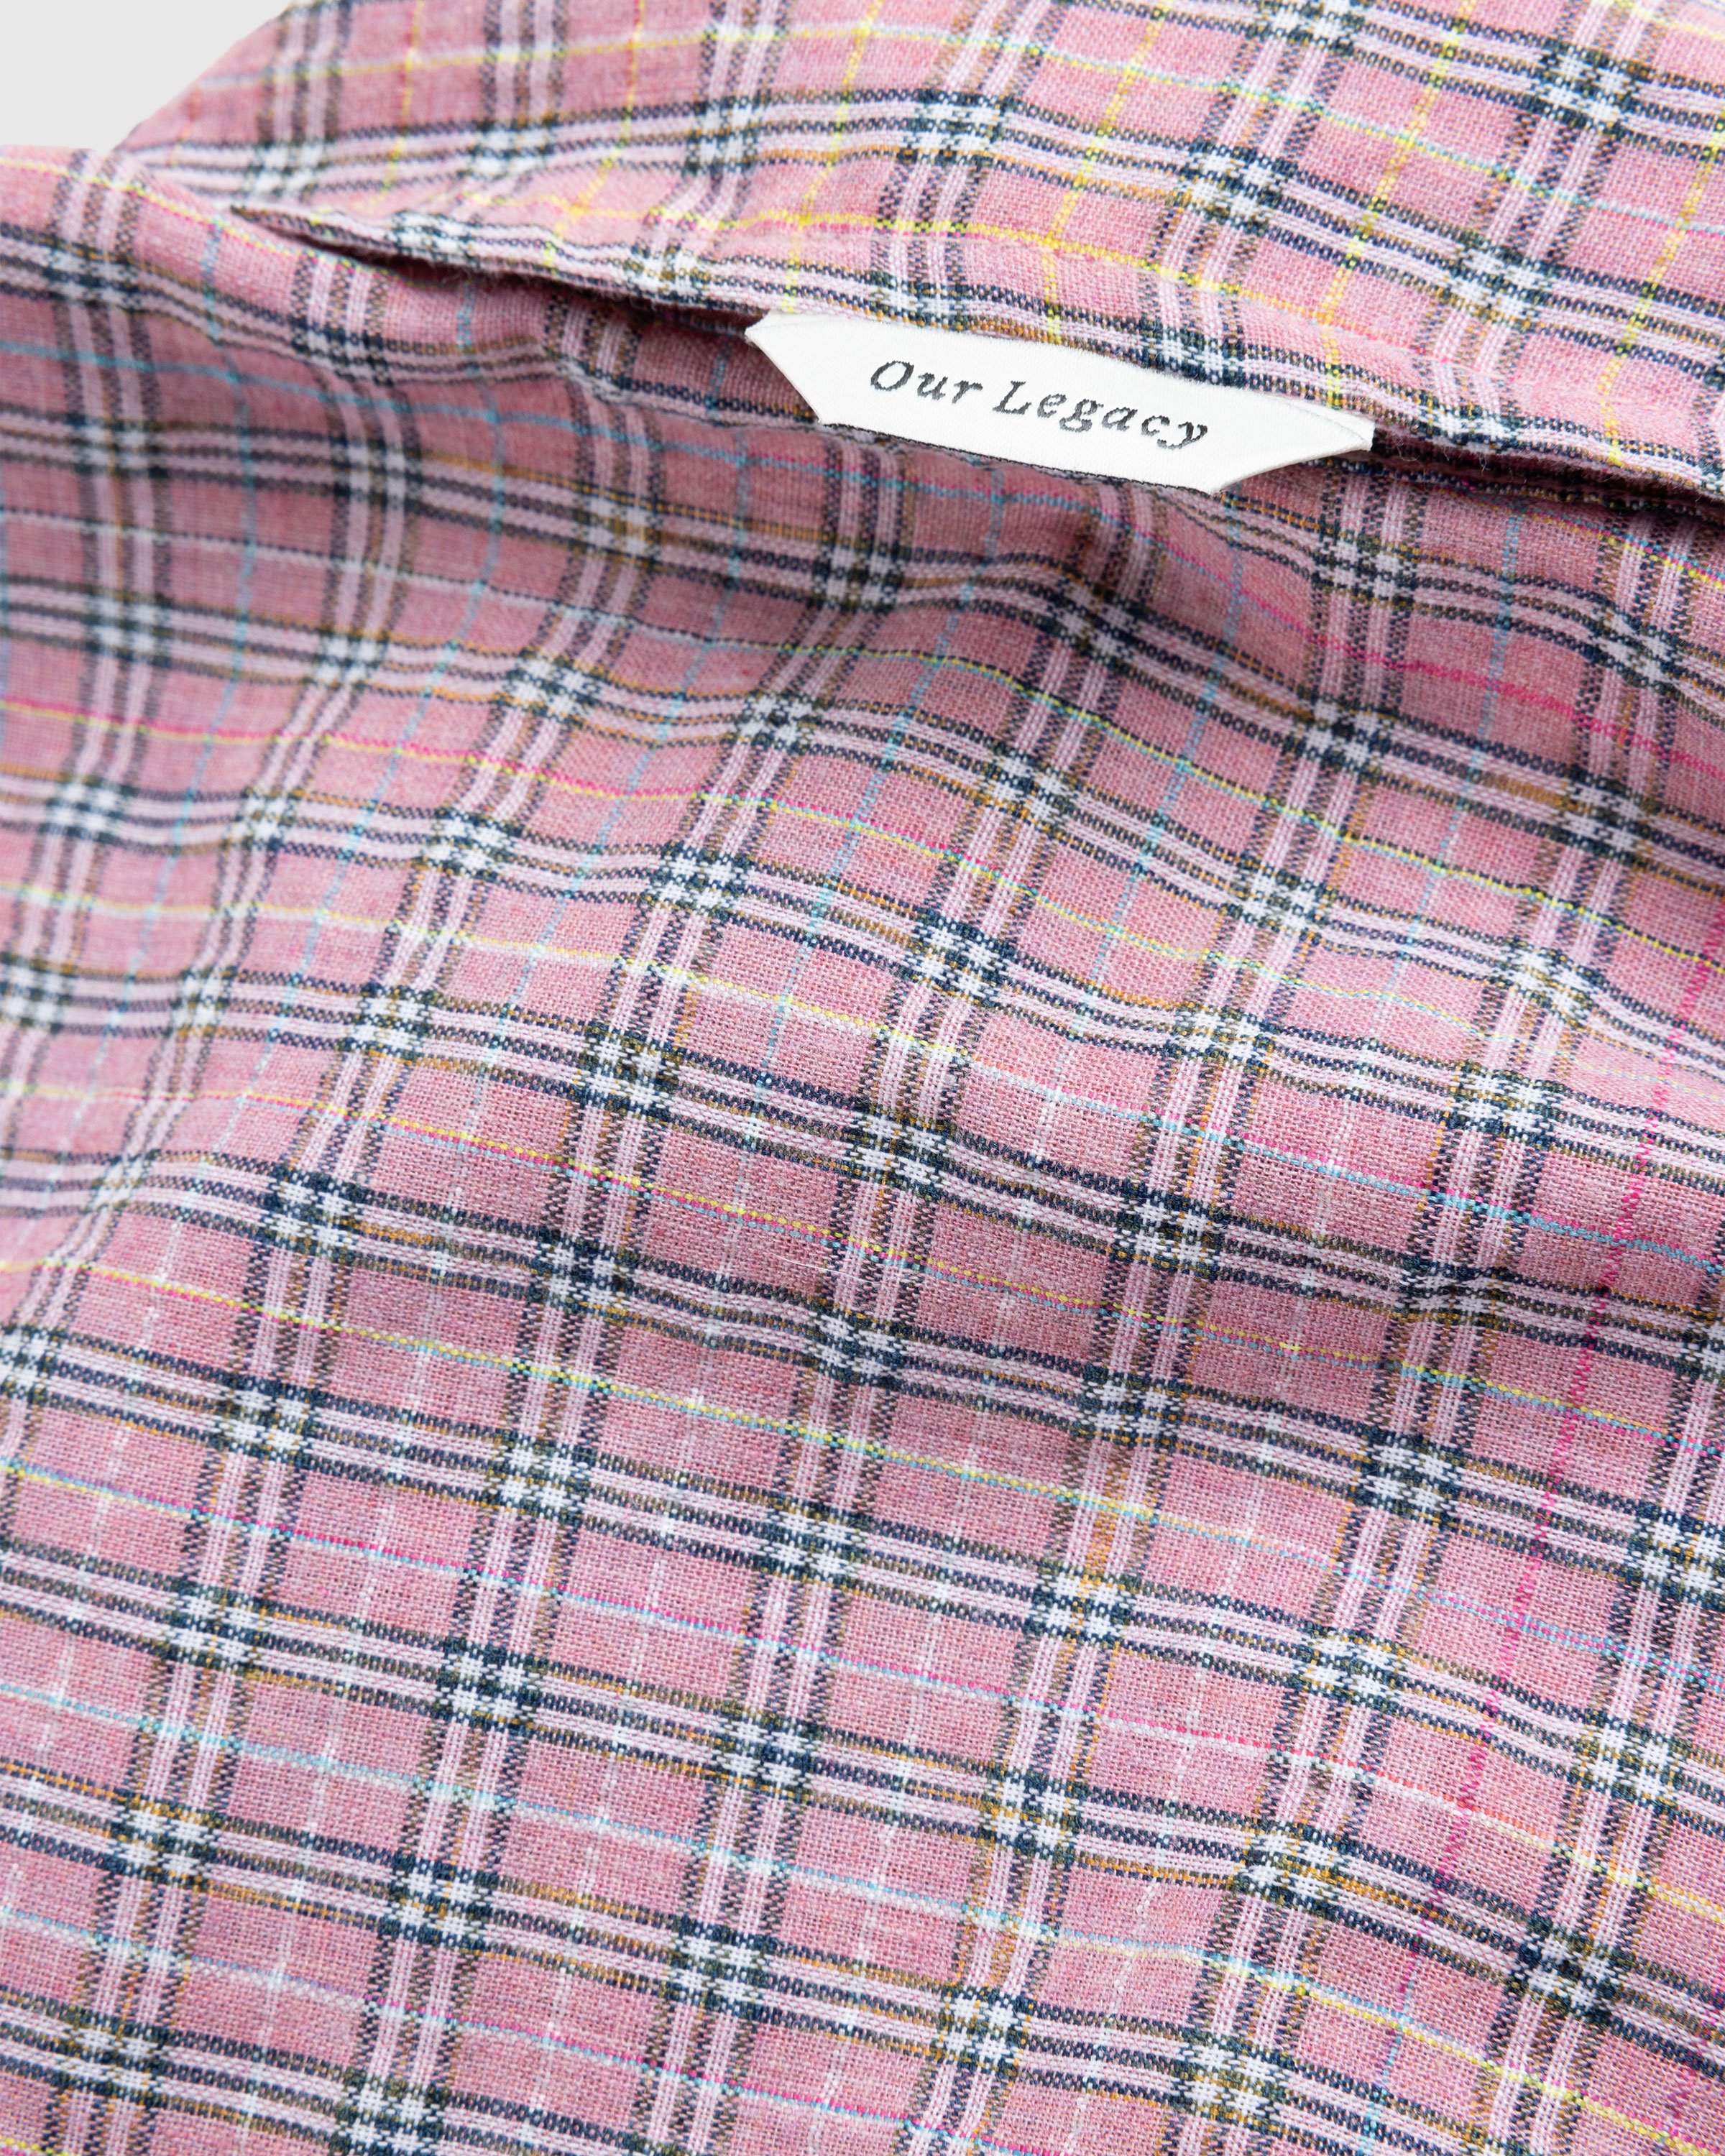 Our Legacy - Borrowed BD Shirt Pink Kimble Check - Clothing - Pink - Image 5